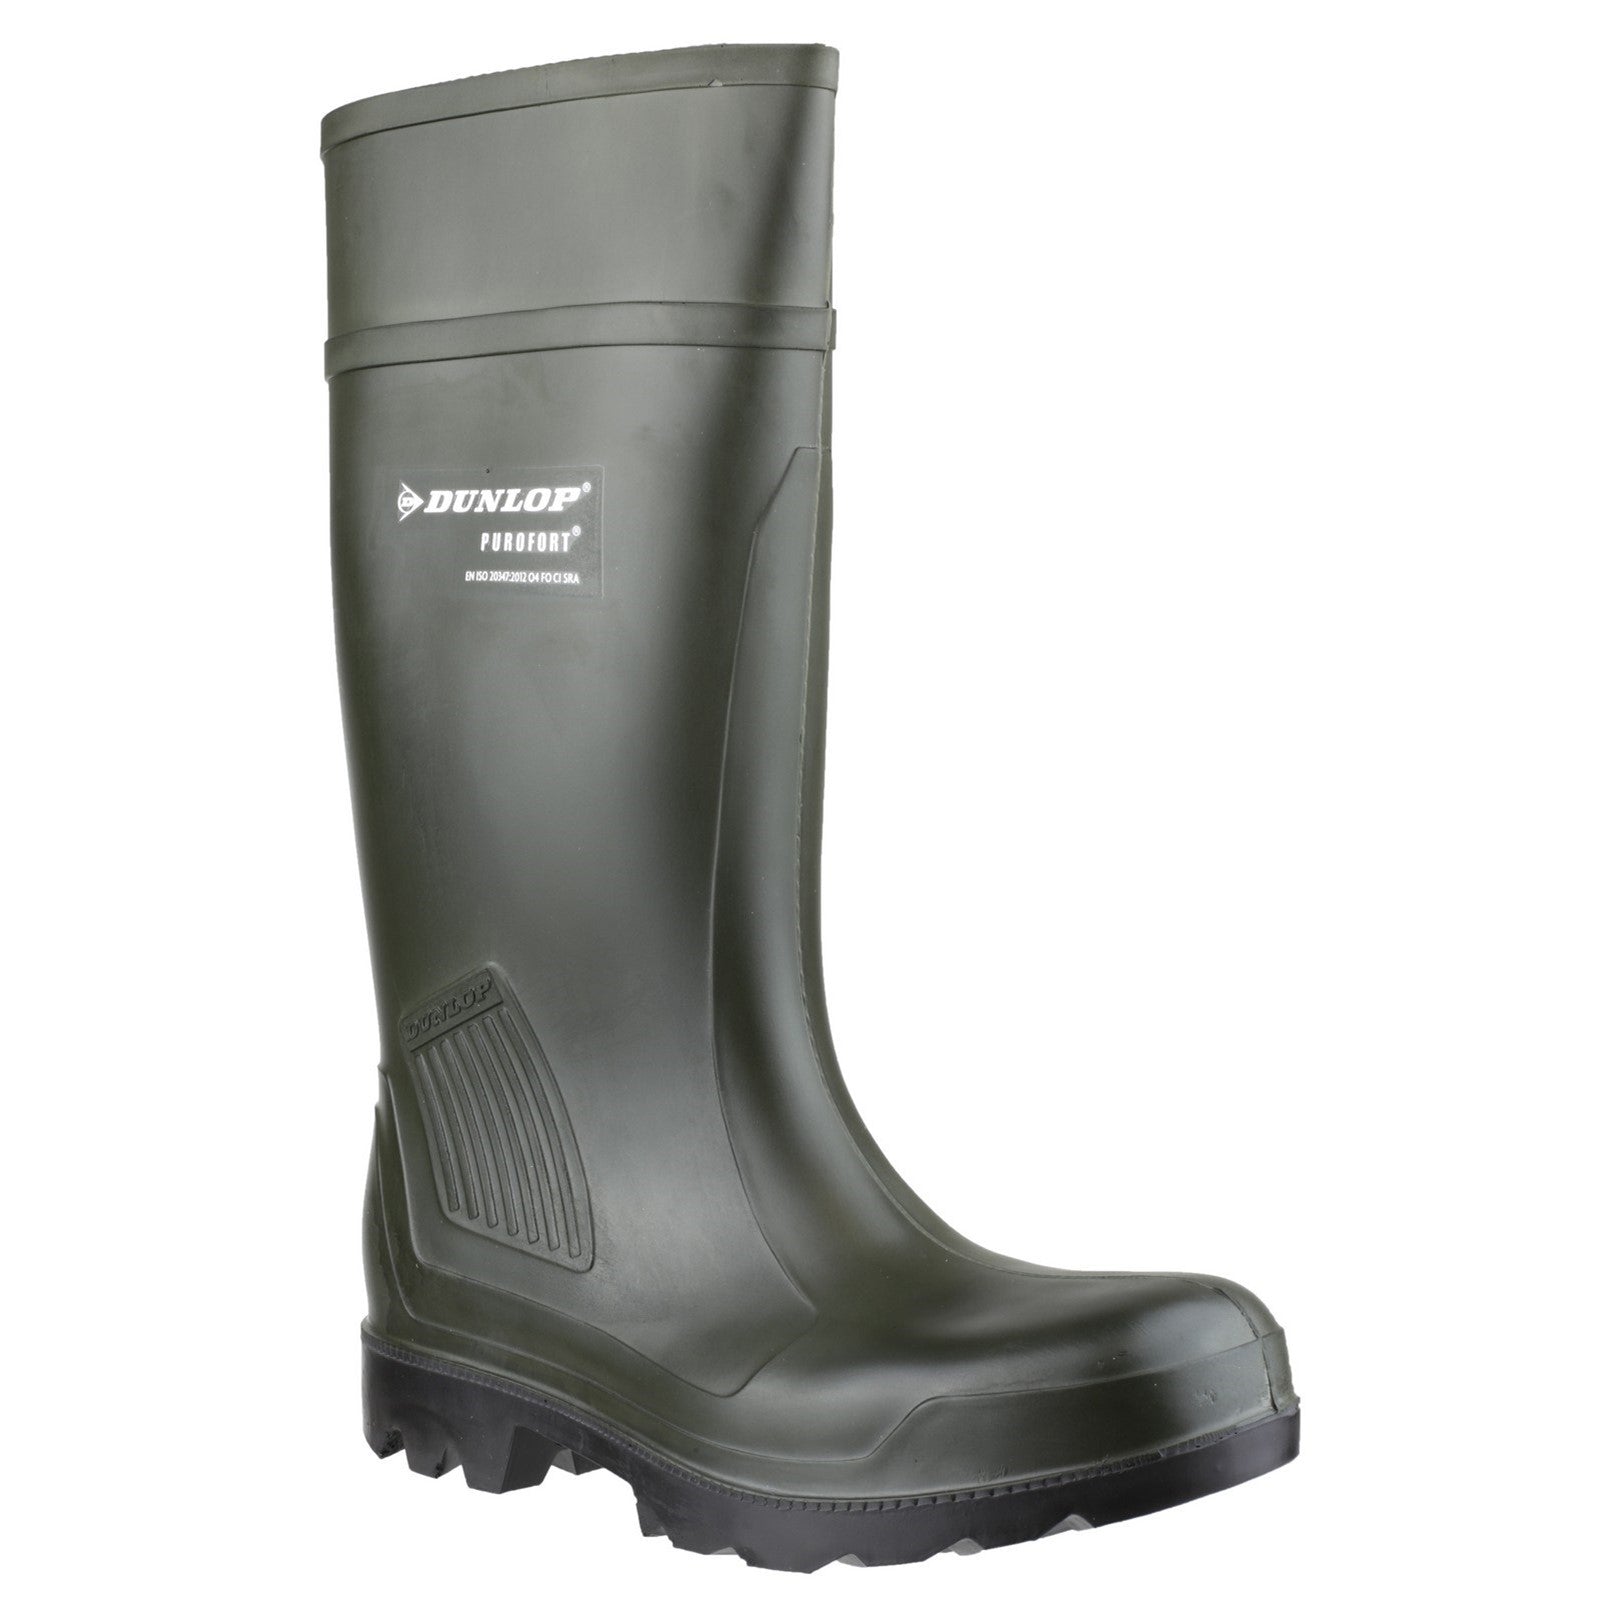 Dunlop Purofort Professional Wellington Boots